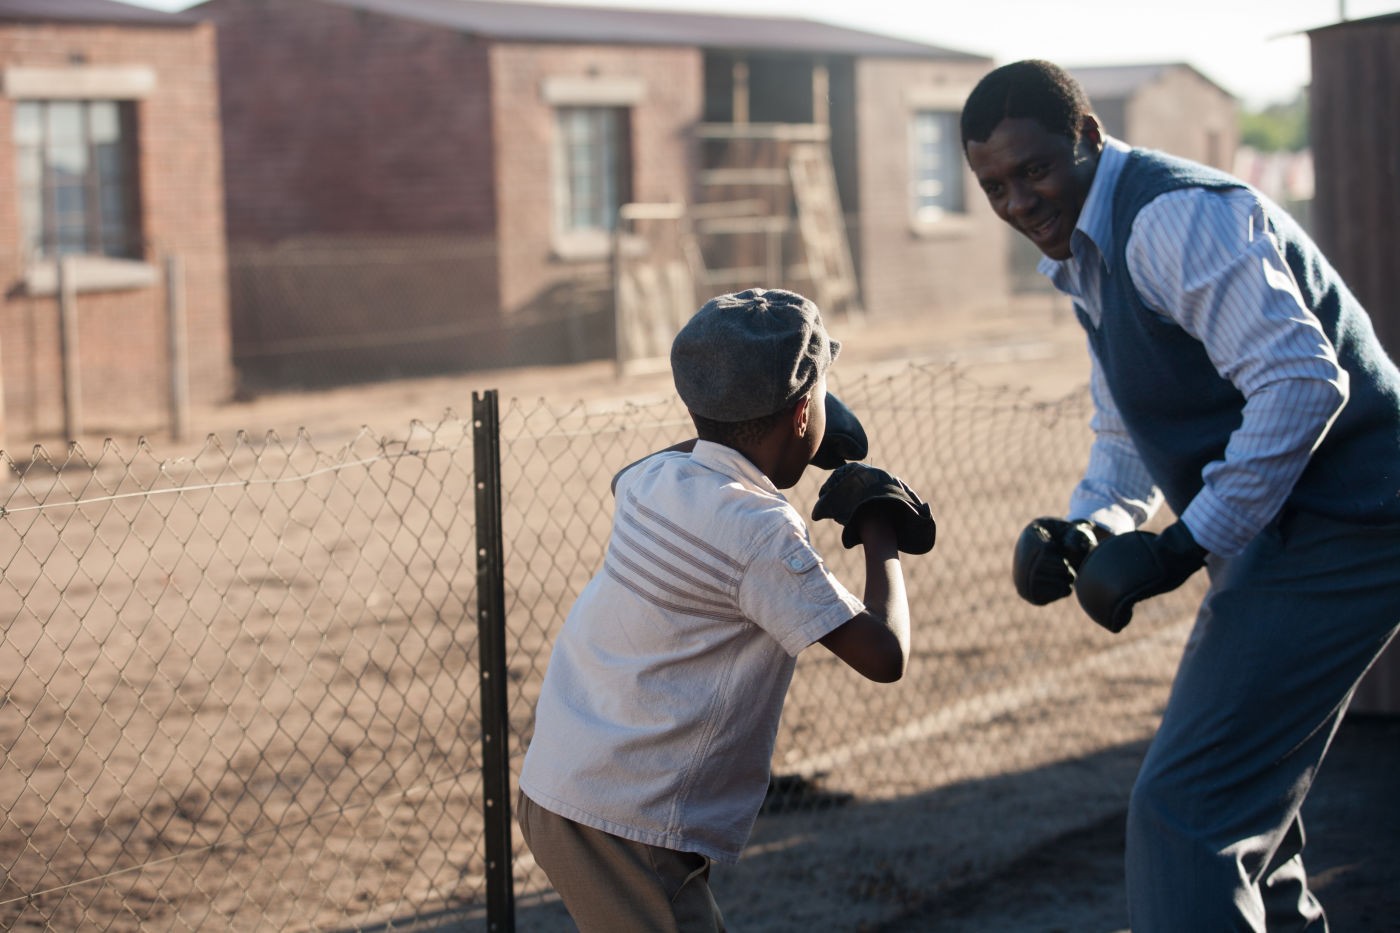 Idris Elba stars as Nelson Mandela in The Weinstein Company's' Mandela: Long Walk to Freedom (2013)